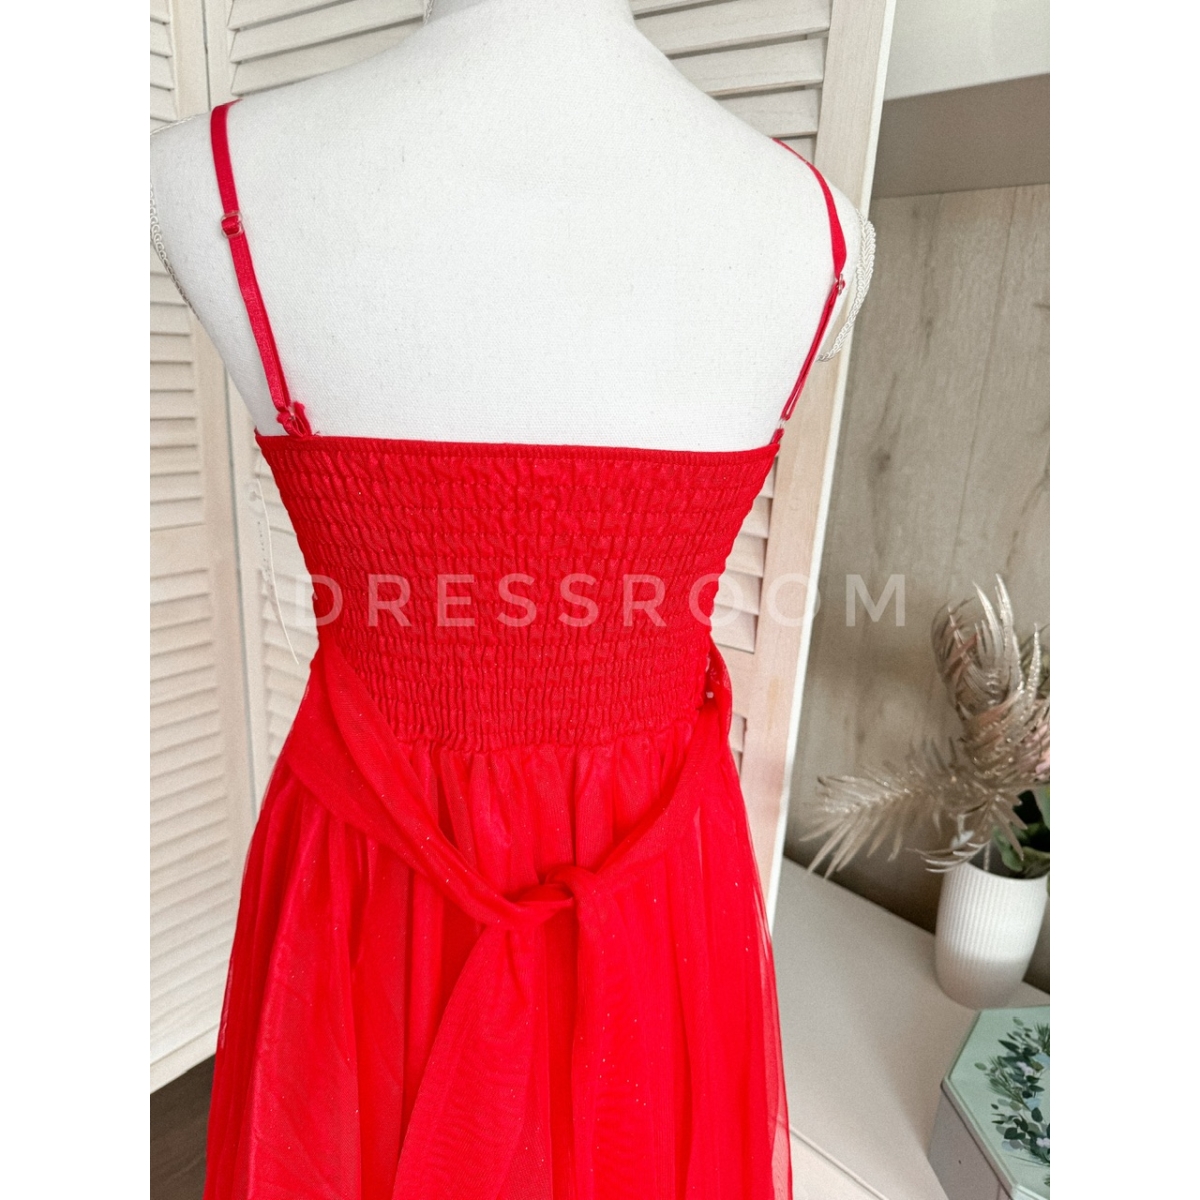 LUXORY csillámos ruha - Piros - Menyecske ruha